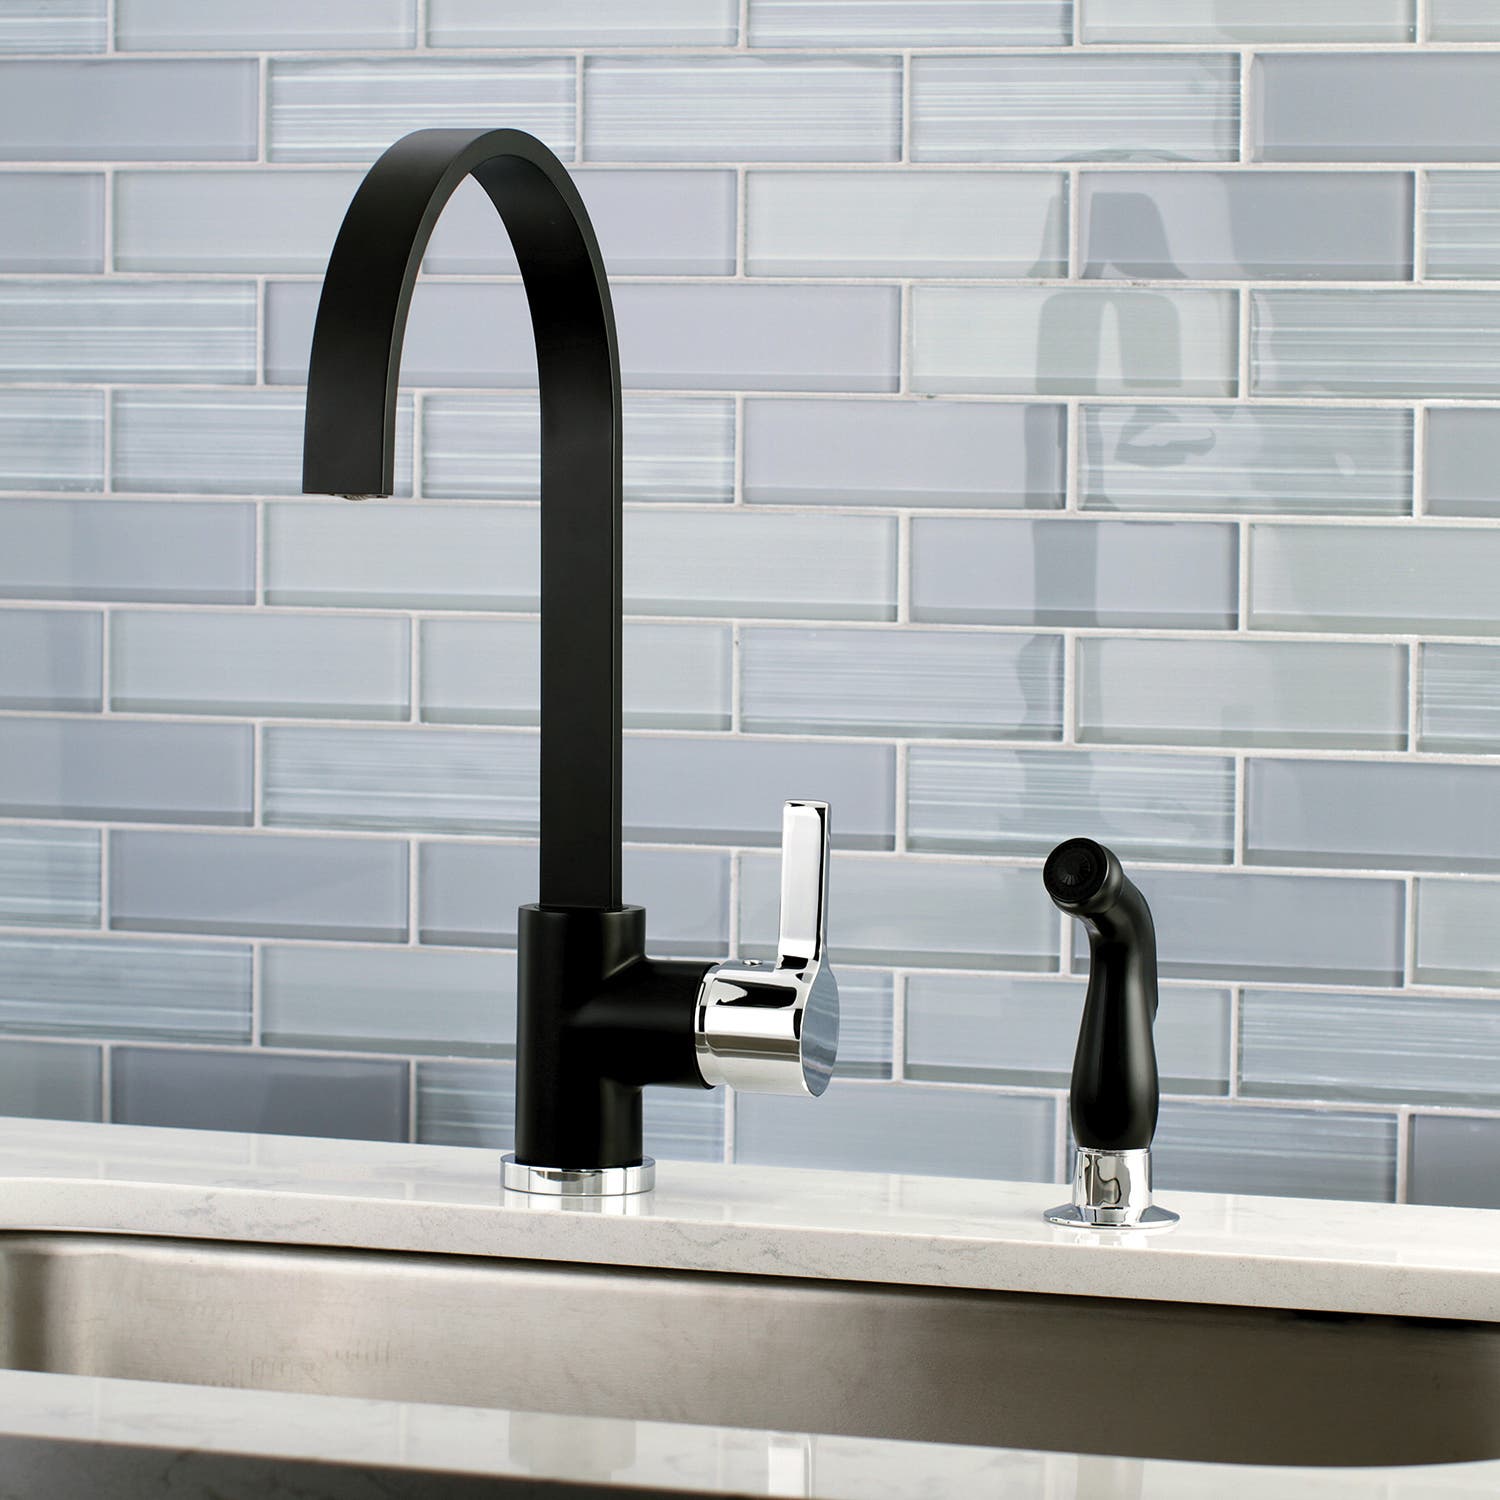 FAUCET FEATURE 4: Profile of the LS8717DLSP Faucetaire Single Handle Kitchen Faucet